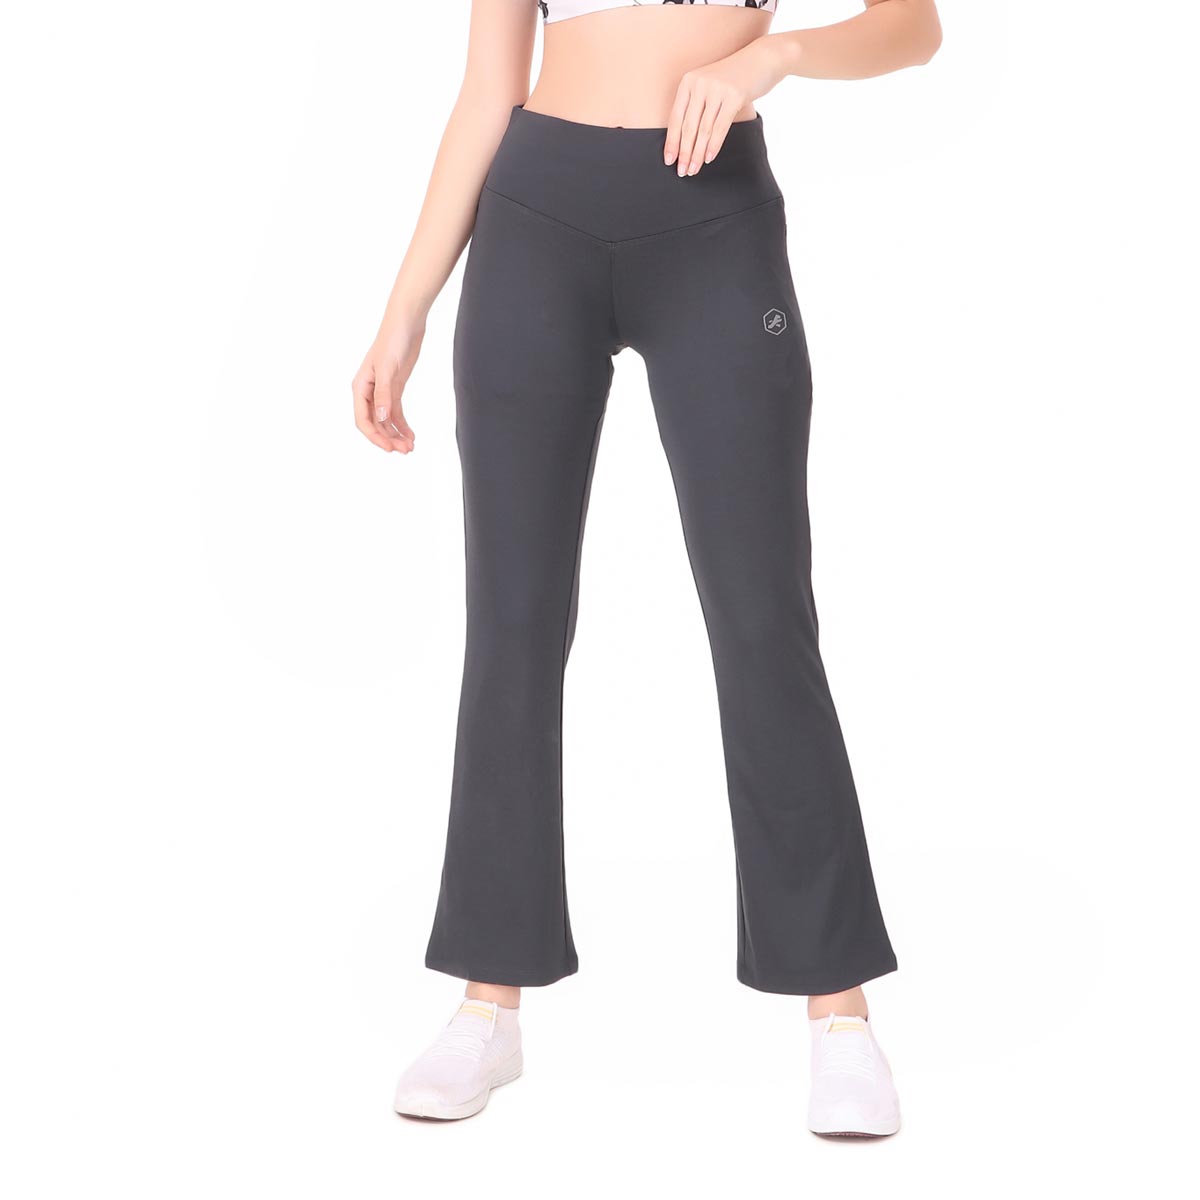 Performance Yoga Pant For Women (Coal Grey)